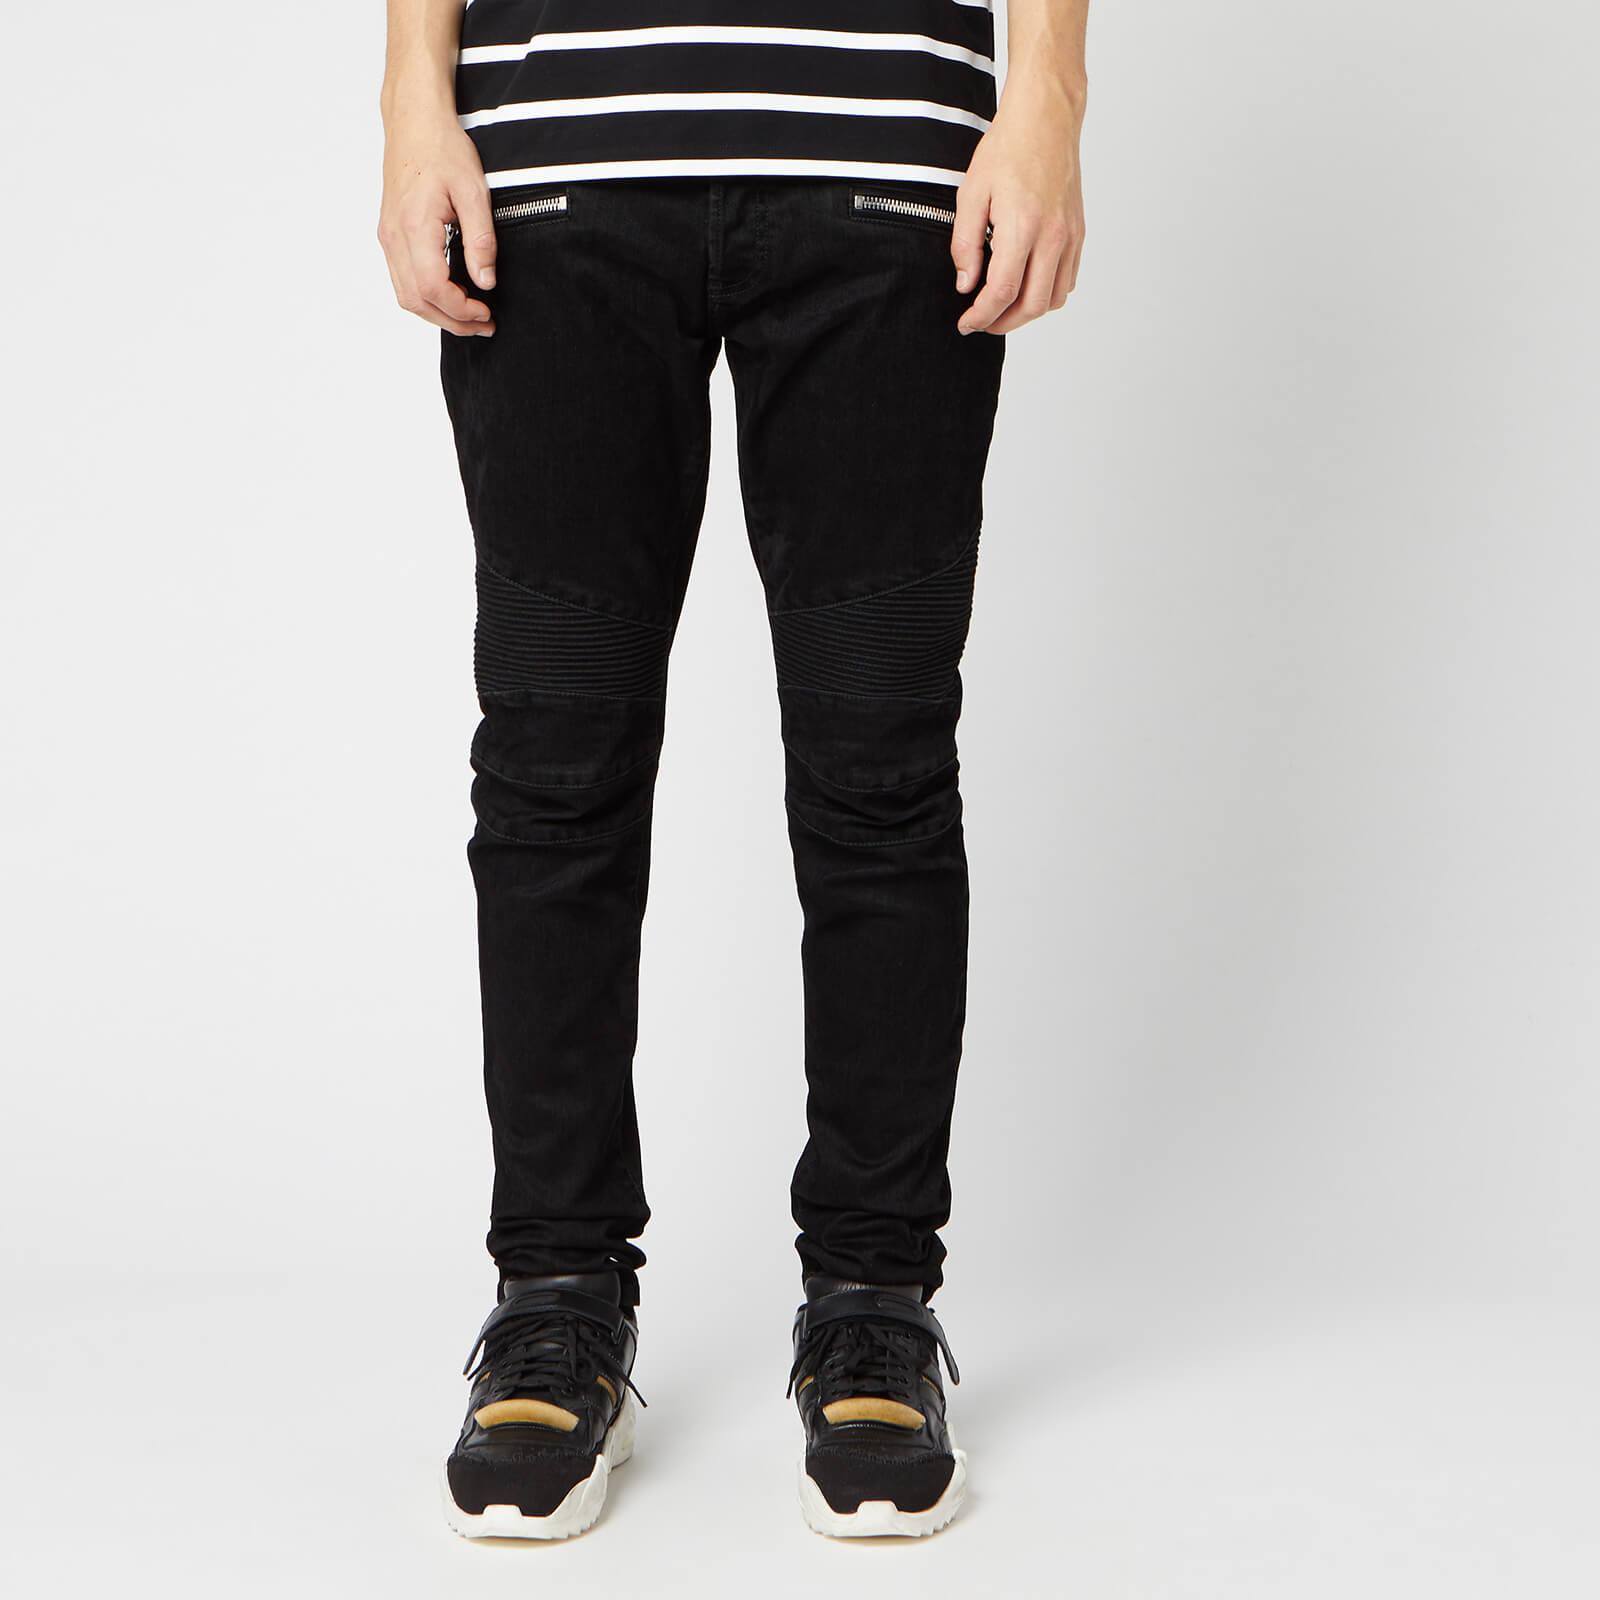 Balmain Denim Monogram Ribbed Slim Jeans in Black for Men - Lyst